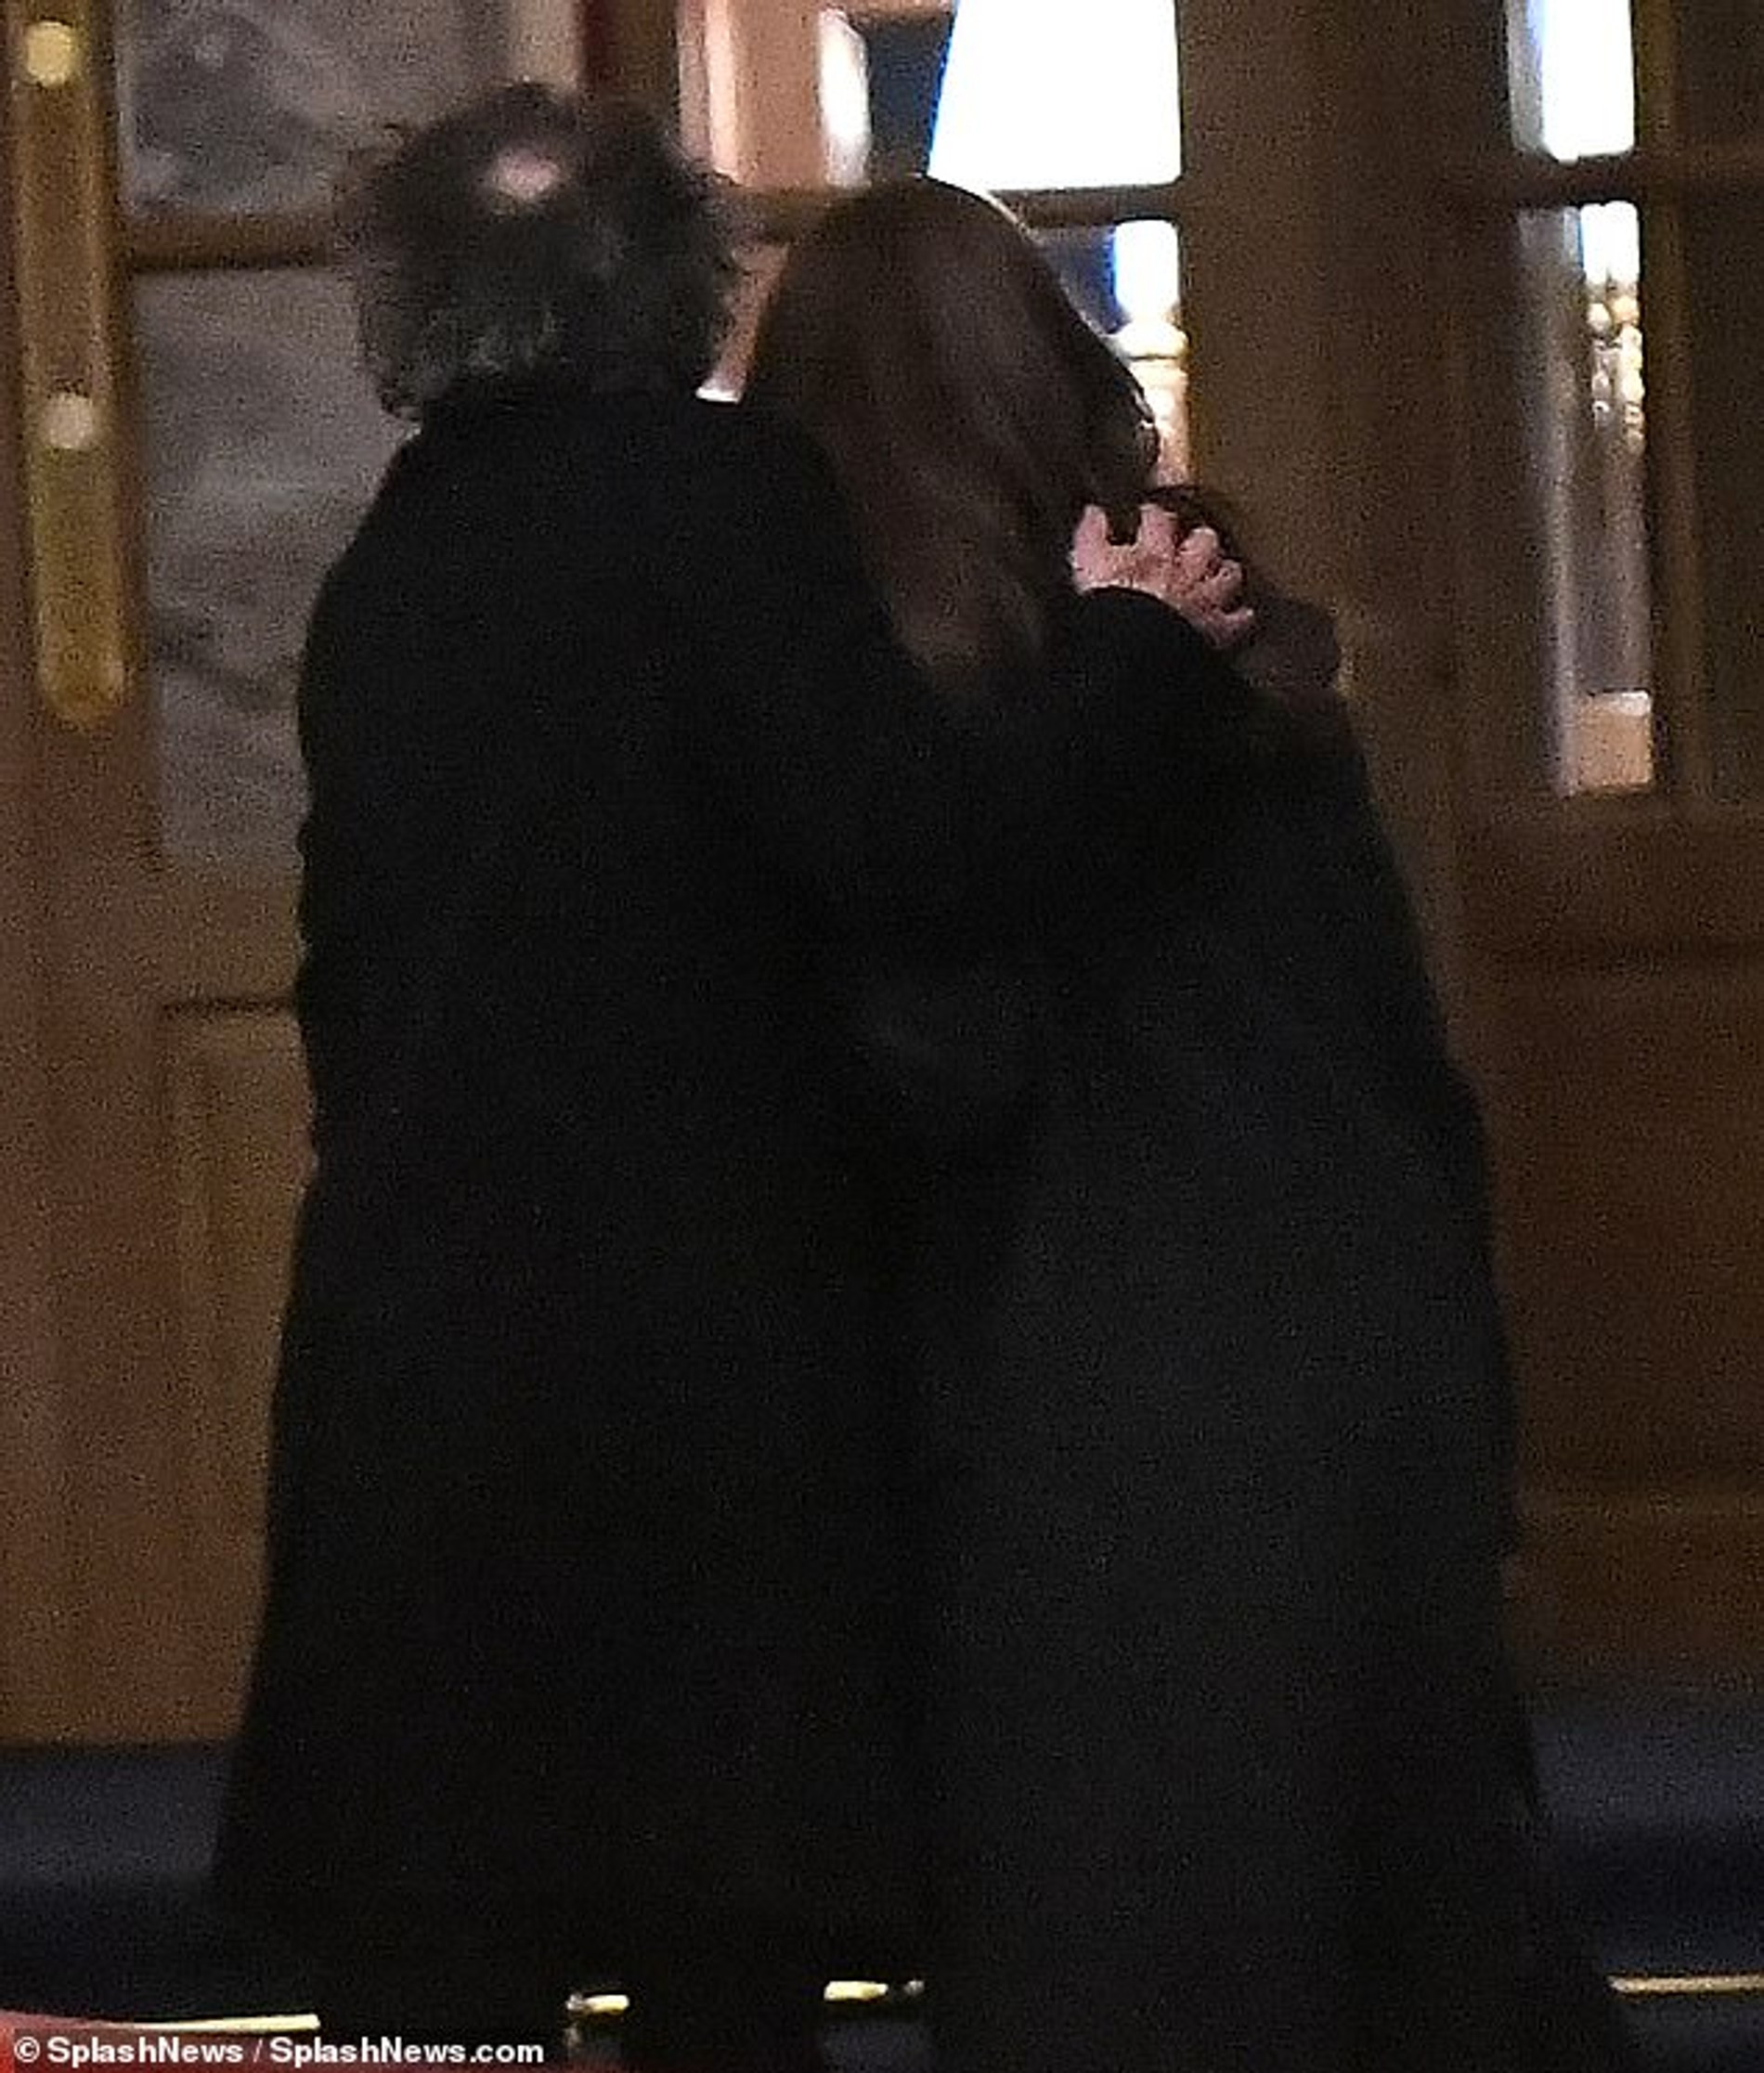 Моника Беллуччи и Тим Бертон на свидании в День святого Валентина
Фото: Daily Mail